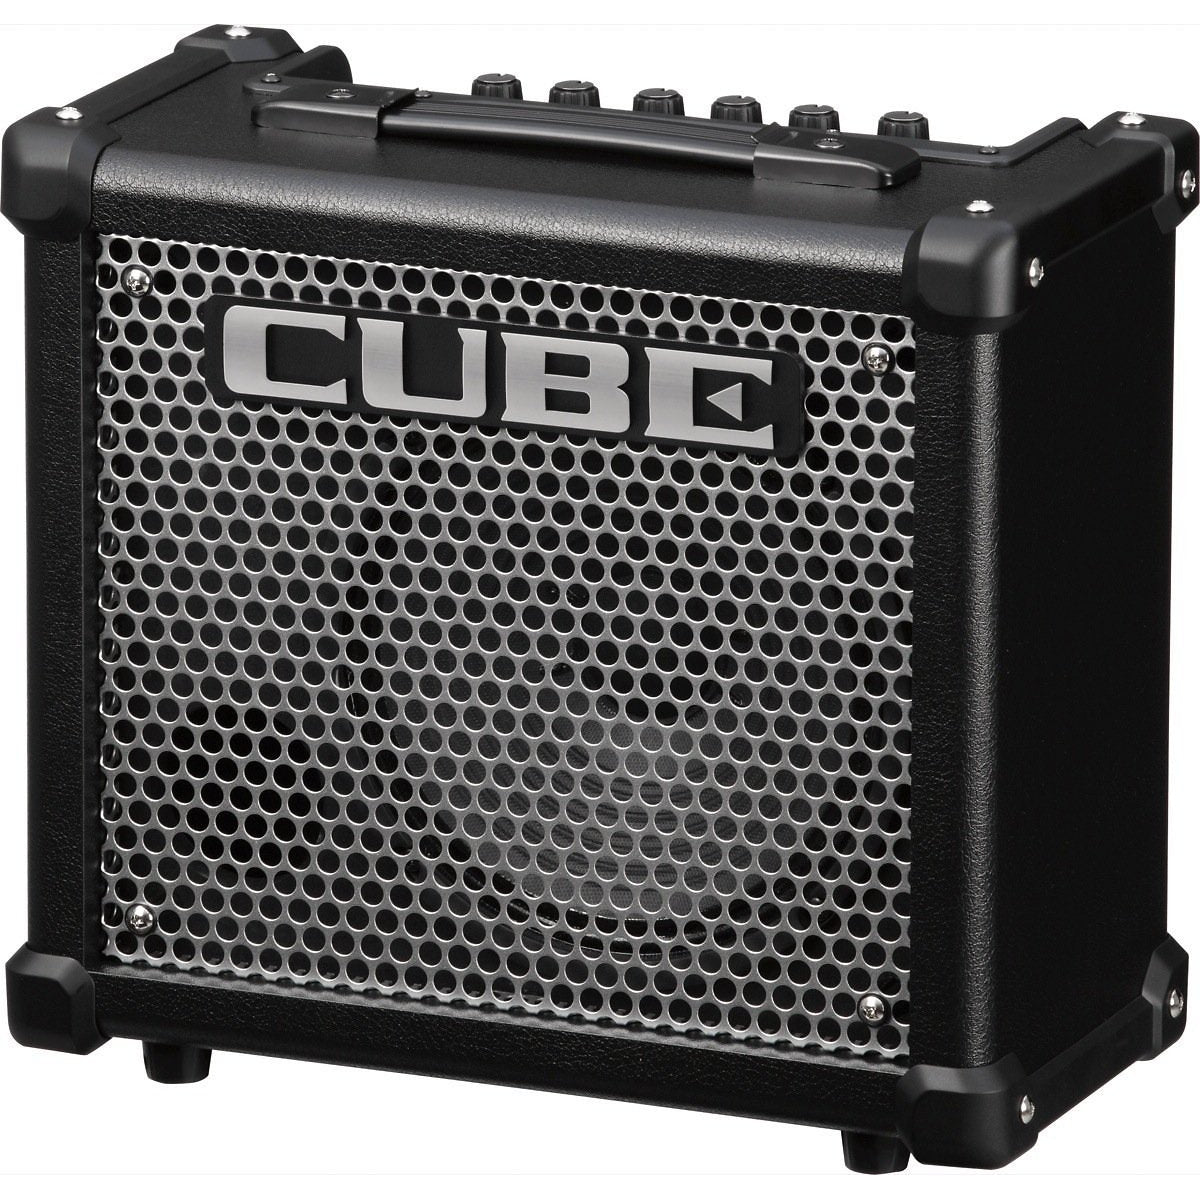 Roland CUBE 10GX Guitar Combo Amplifier